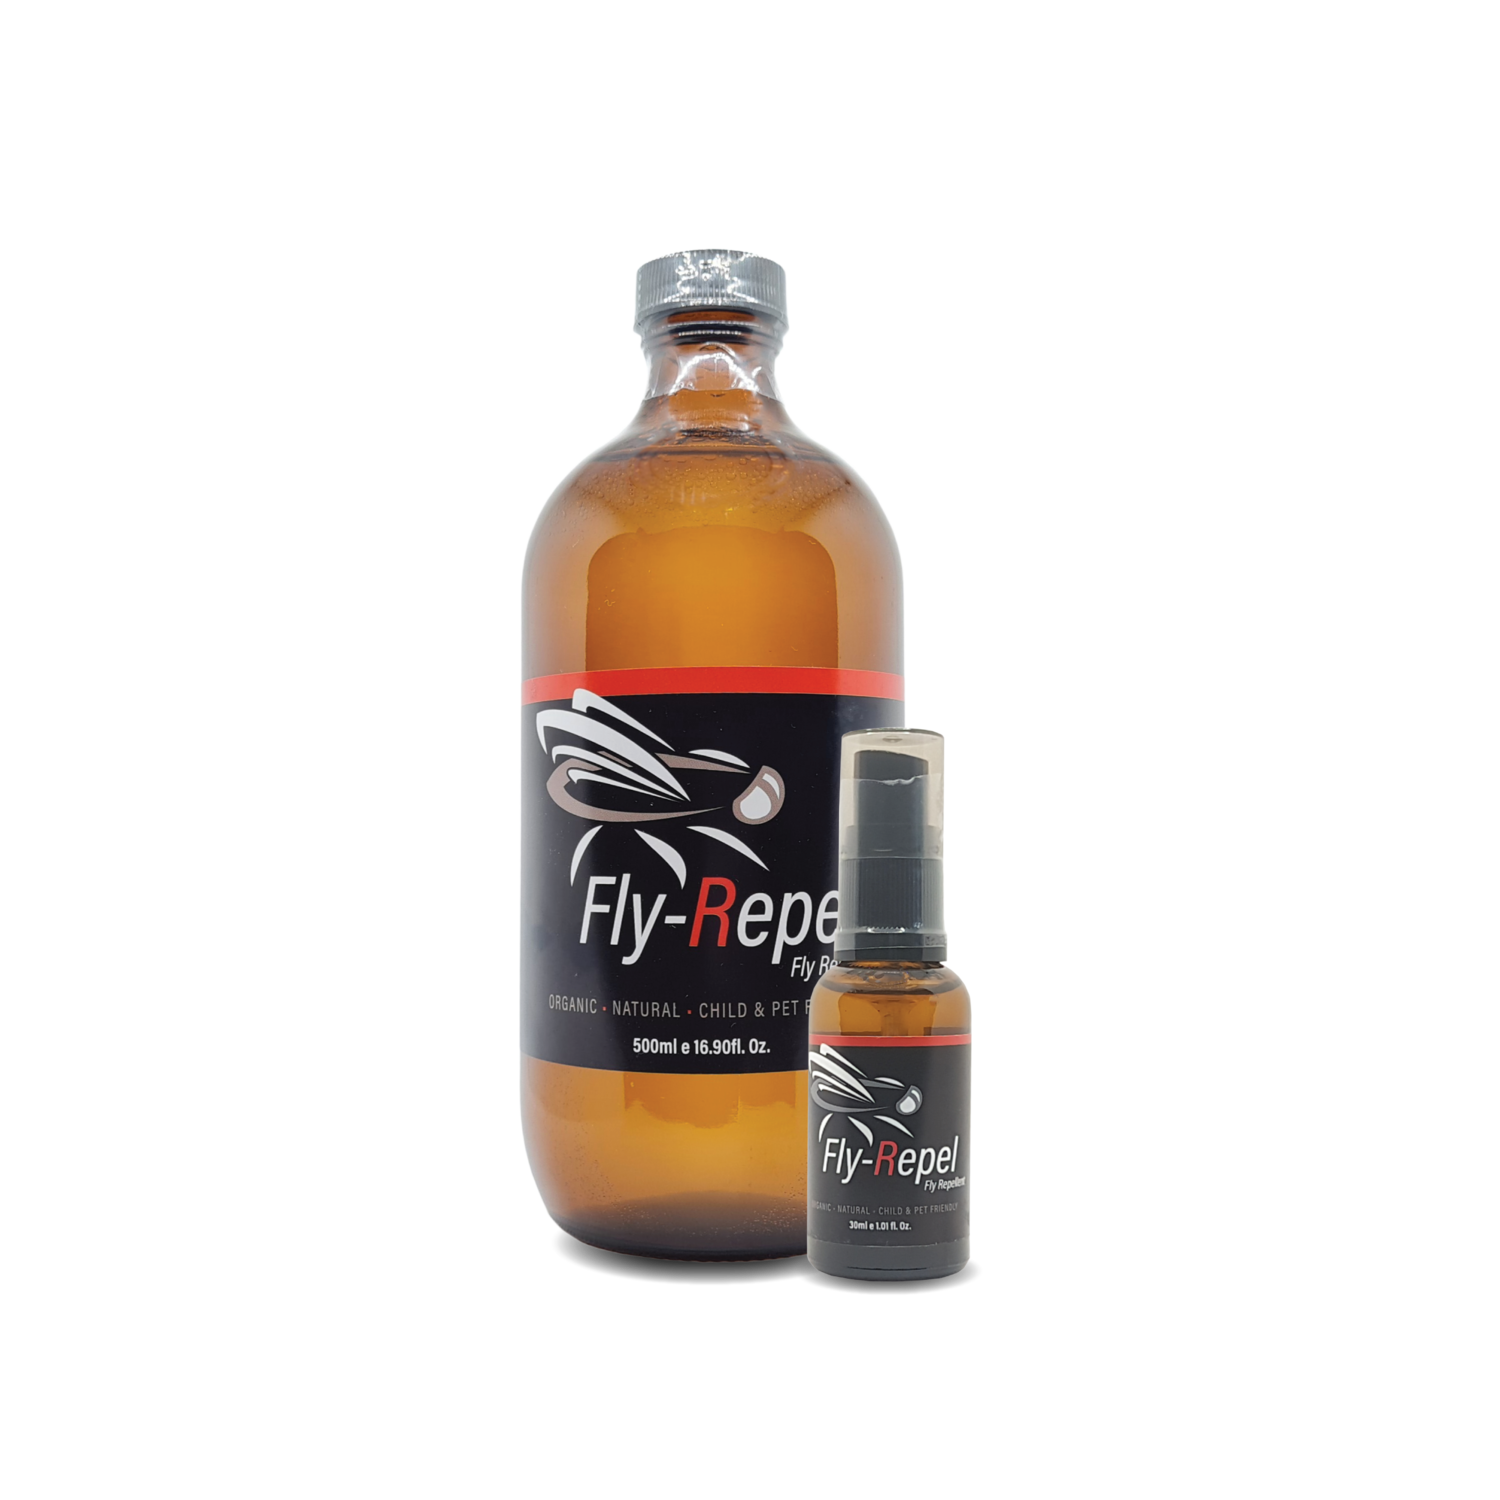 Fly-Repel Fly Repellent - Value Pack (30ml spray + 500ml refill bottle)